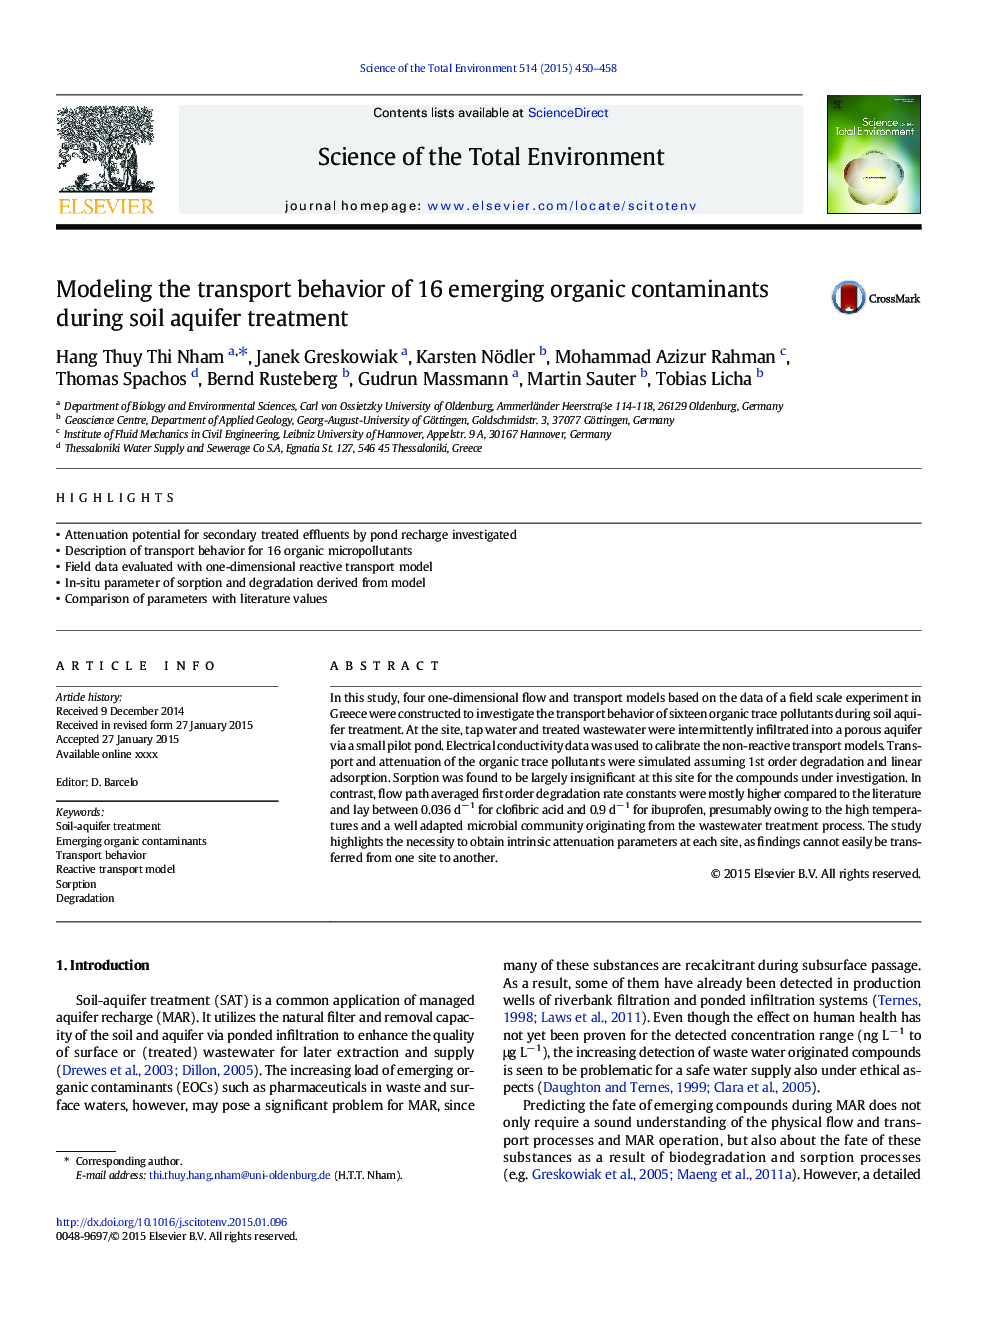 Modeling the transport behavior of 16 emerging organic contaminants during soil aquifer treatment